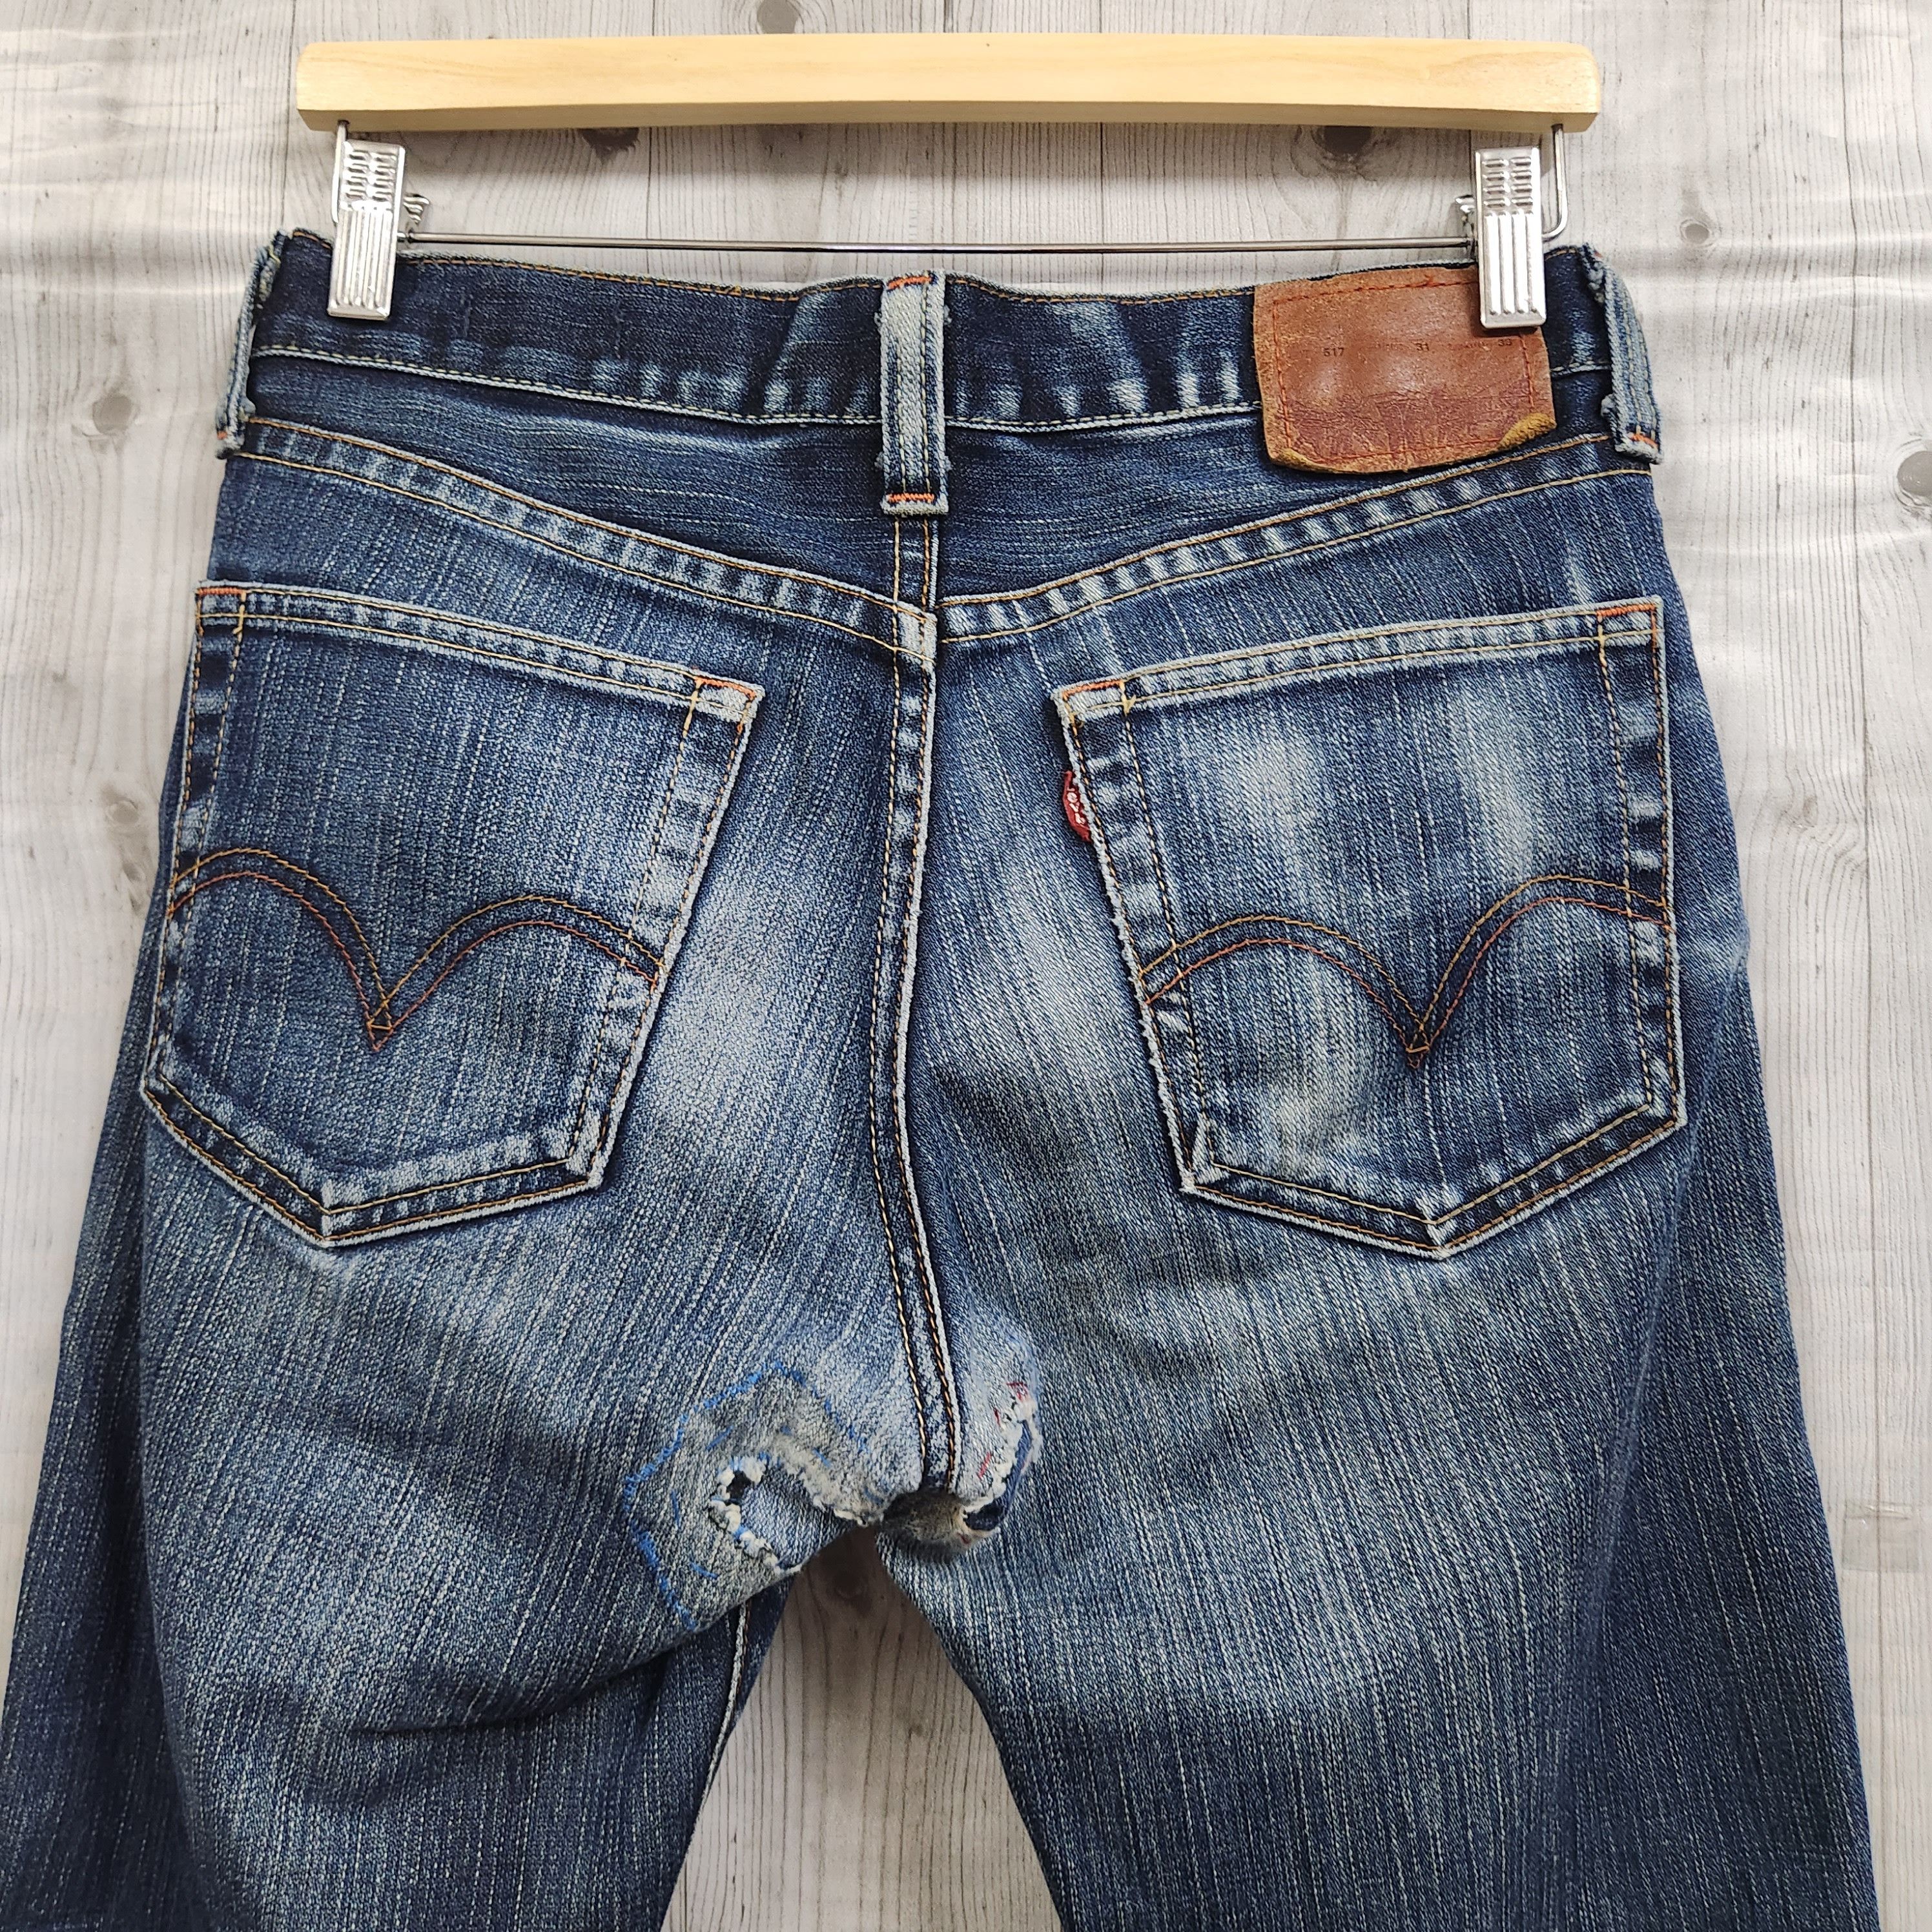 Vintage Levis 517 Premium Denim Jeans Year 2006 - 15